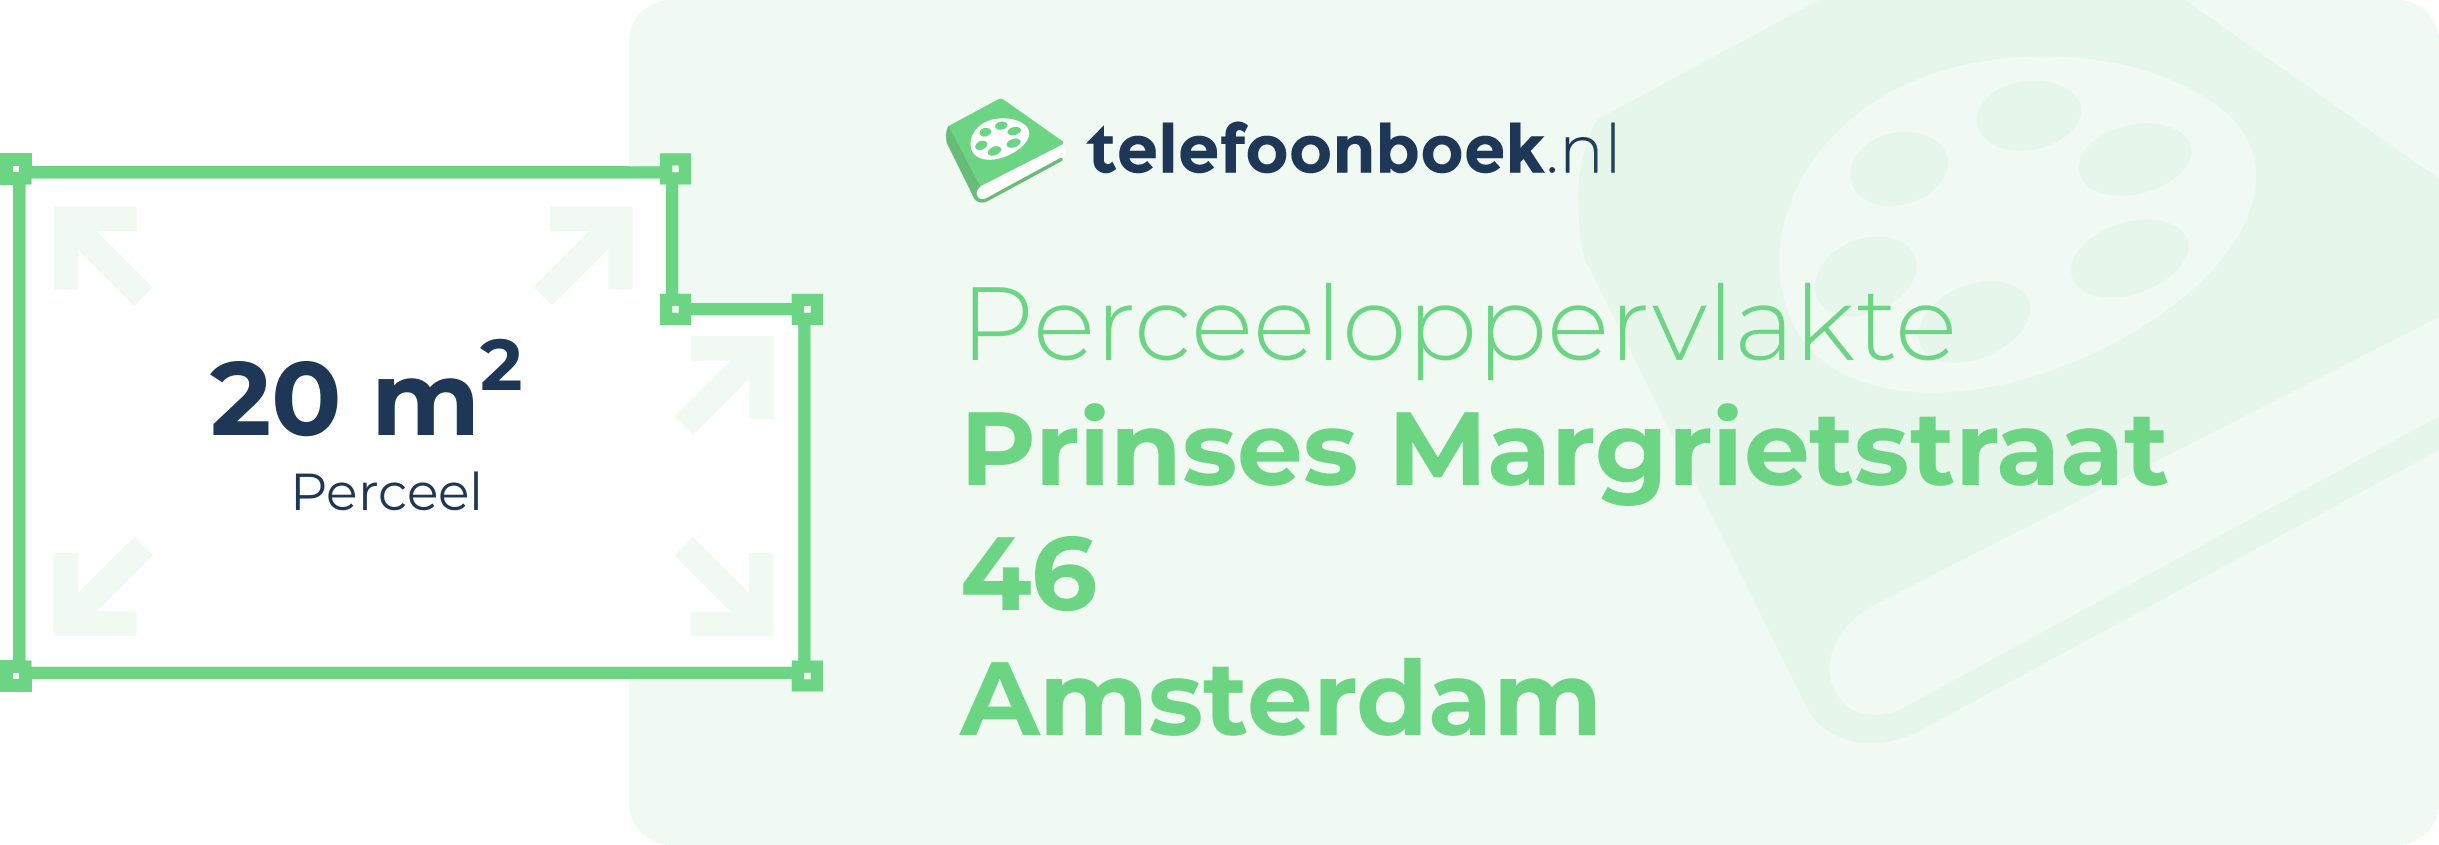 Perceeloppervlakte Prinses Margrietstraat 46 Amsterdam